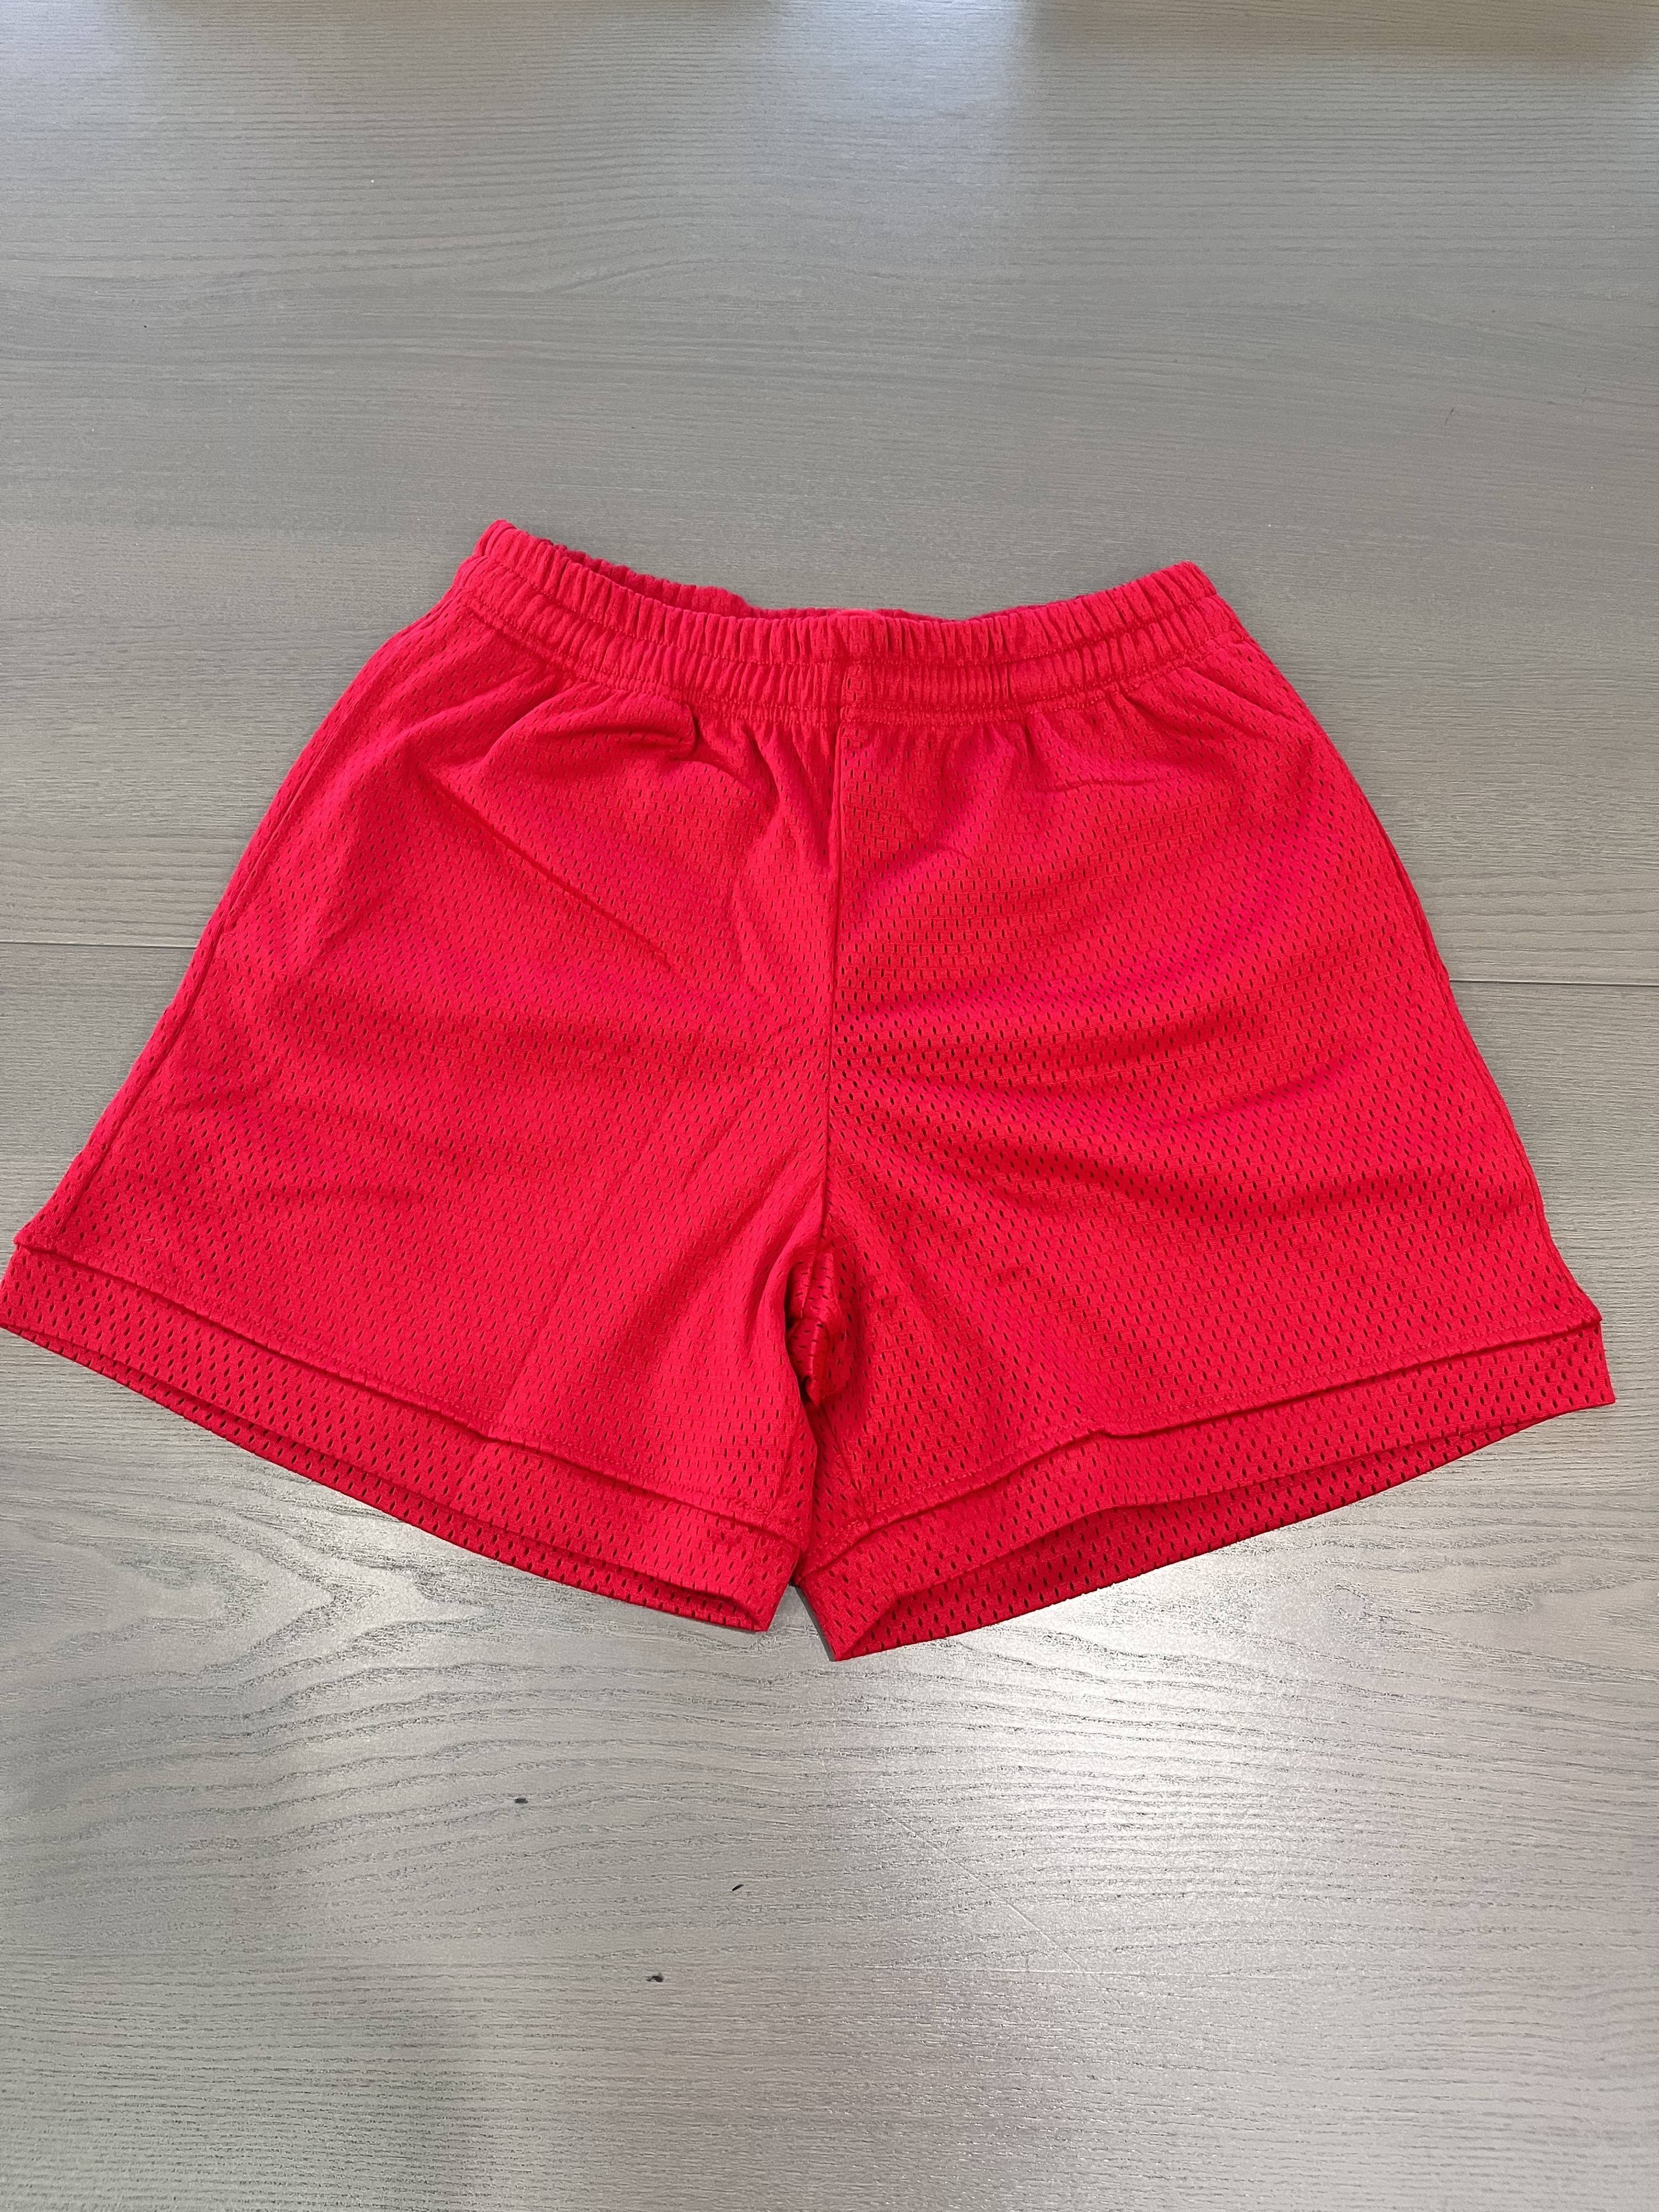 Nexus Clothing Men Basic Solid Mesh Breathable Mesh Shorts (Red)